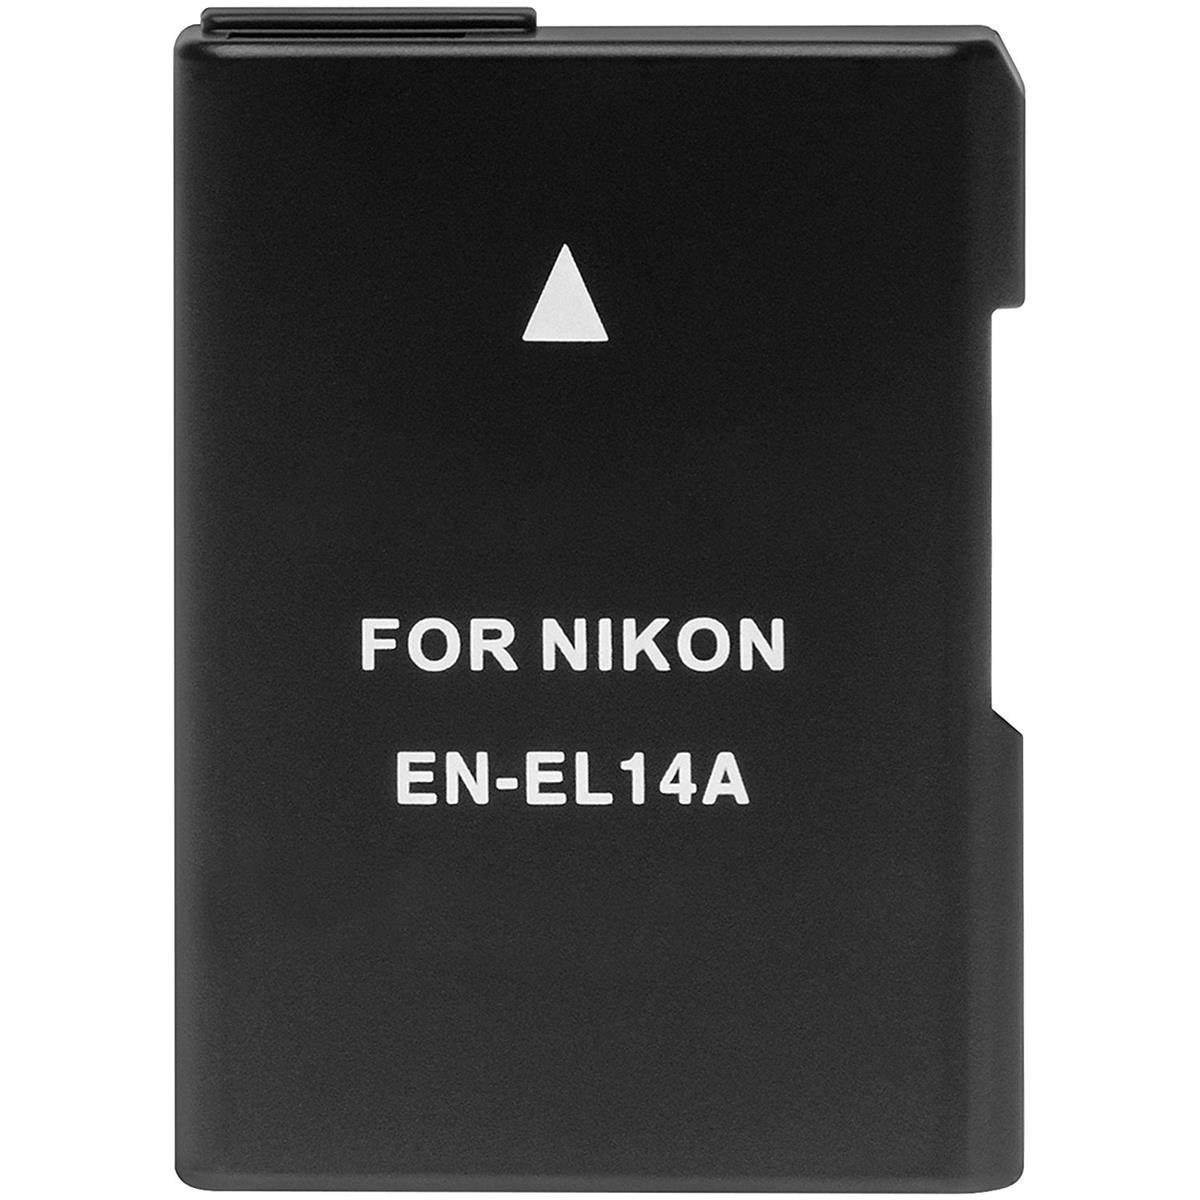 

Power2000 EN-EL14a 7.4V Rechargeable Lithium-Ion Battery for Nikon DSLR Cameras